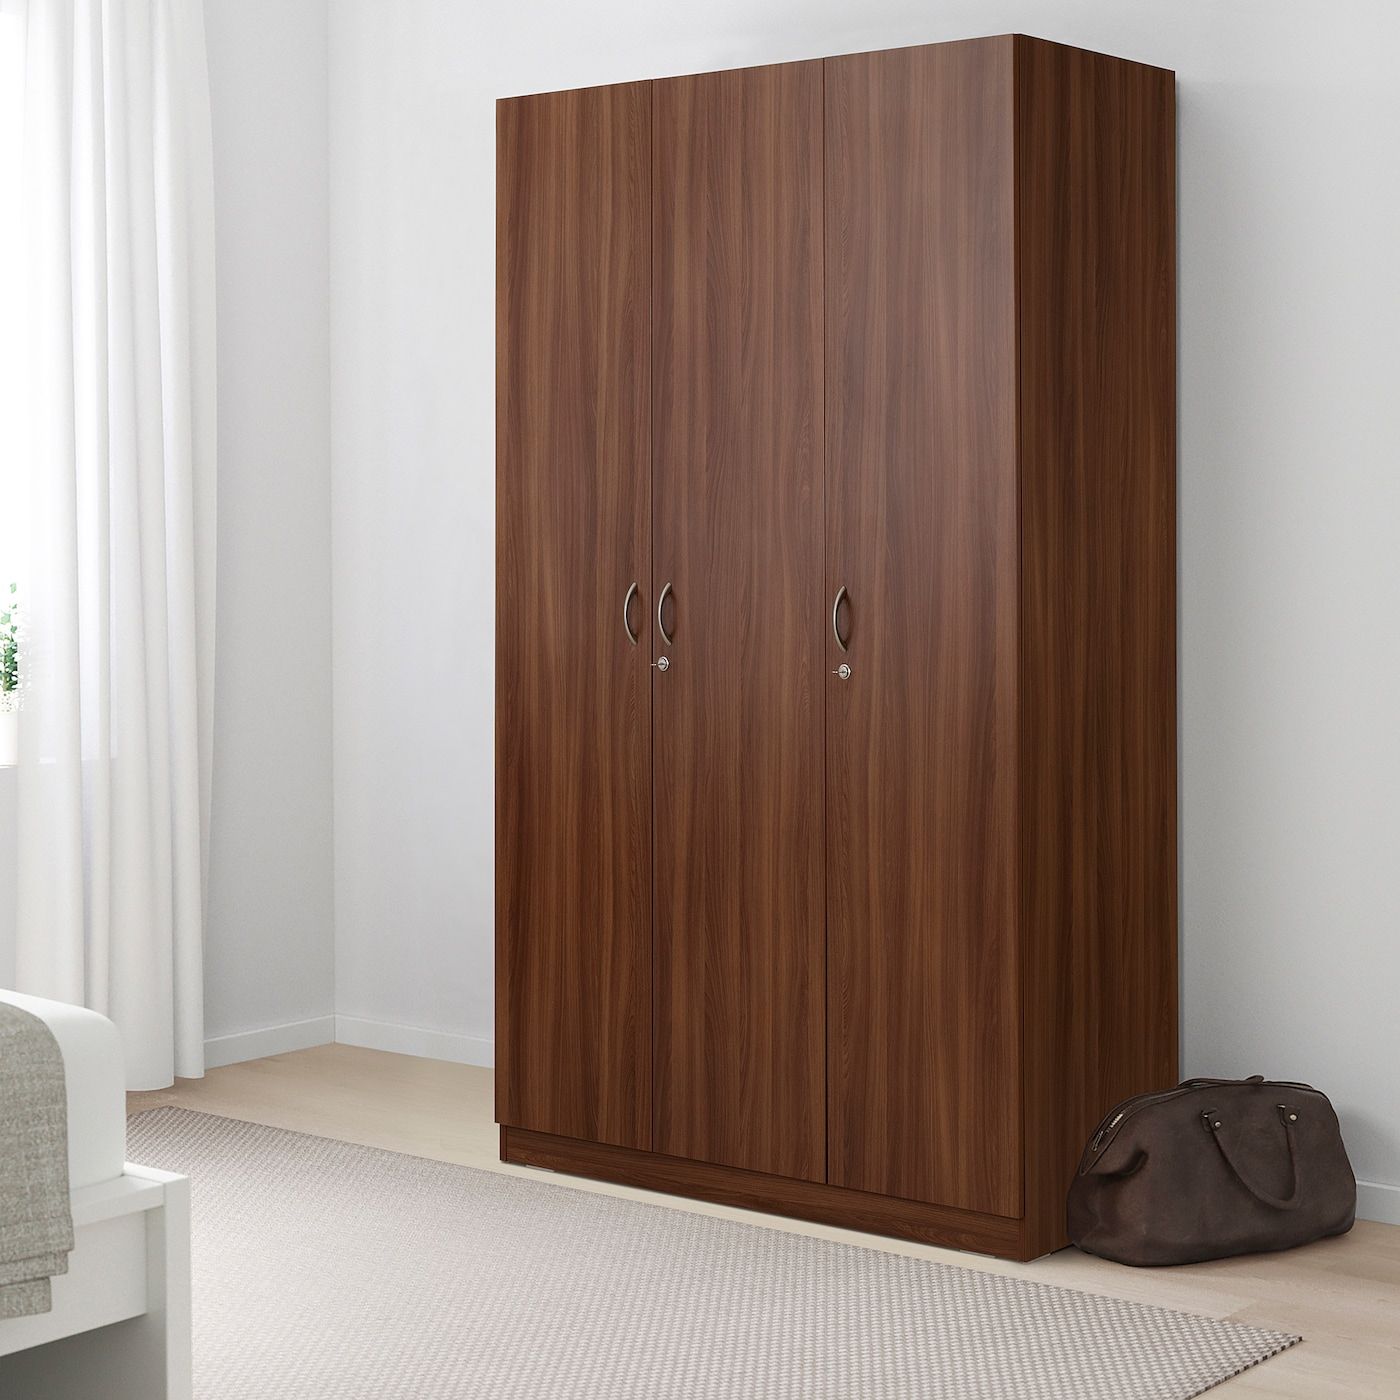 Nodeland Wardrobe With 3 Doors, Medium Brown, 120x52x202 Cm  (471/4x203/8x791/2") – Ikea Inside Medium Size Wardrobes (Photo 10 of 15)